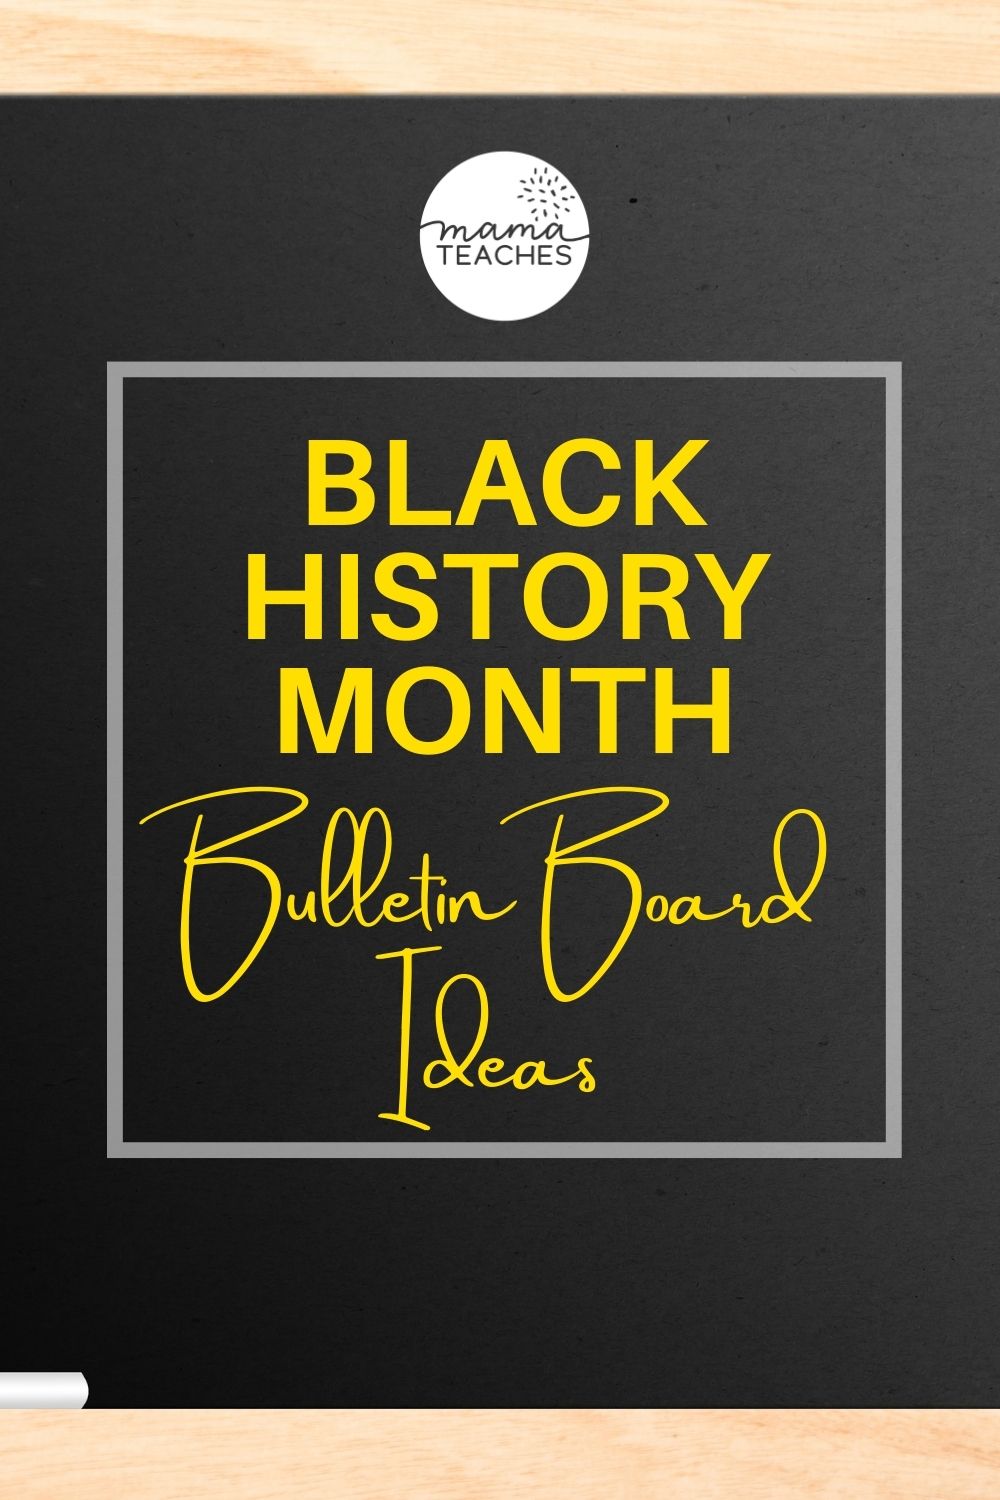 Black History Month Bulletin Board Ideas